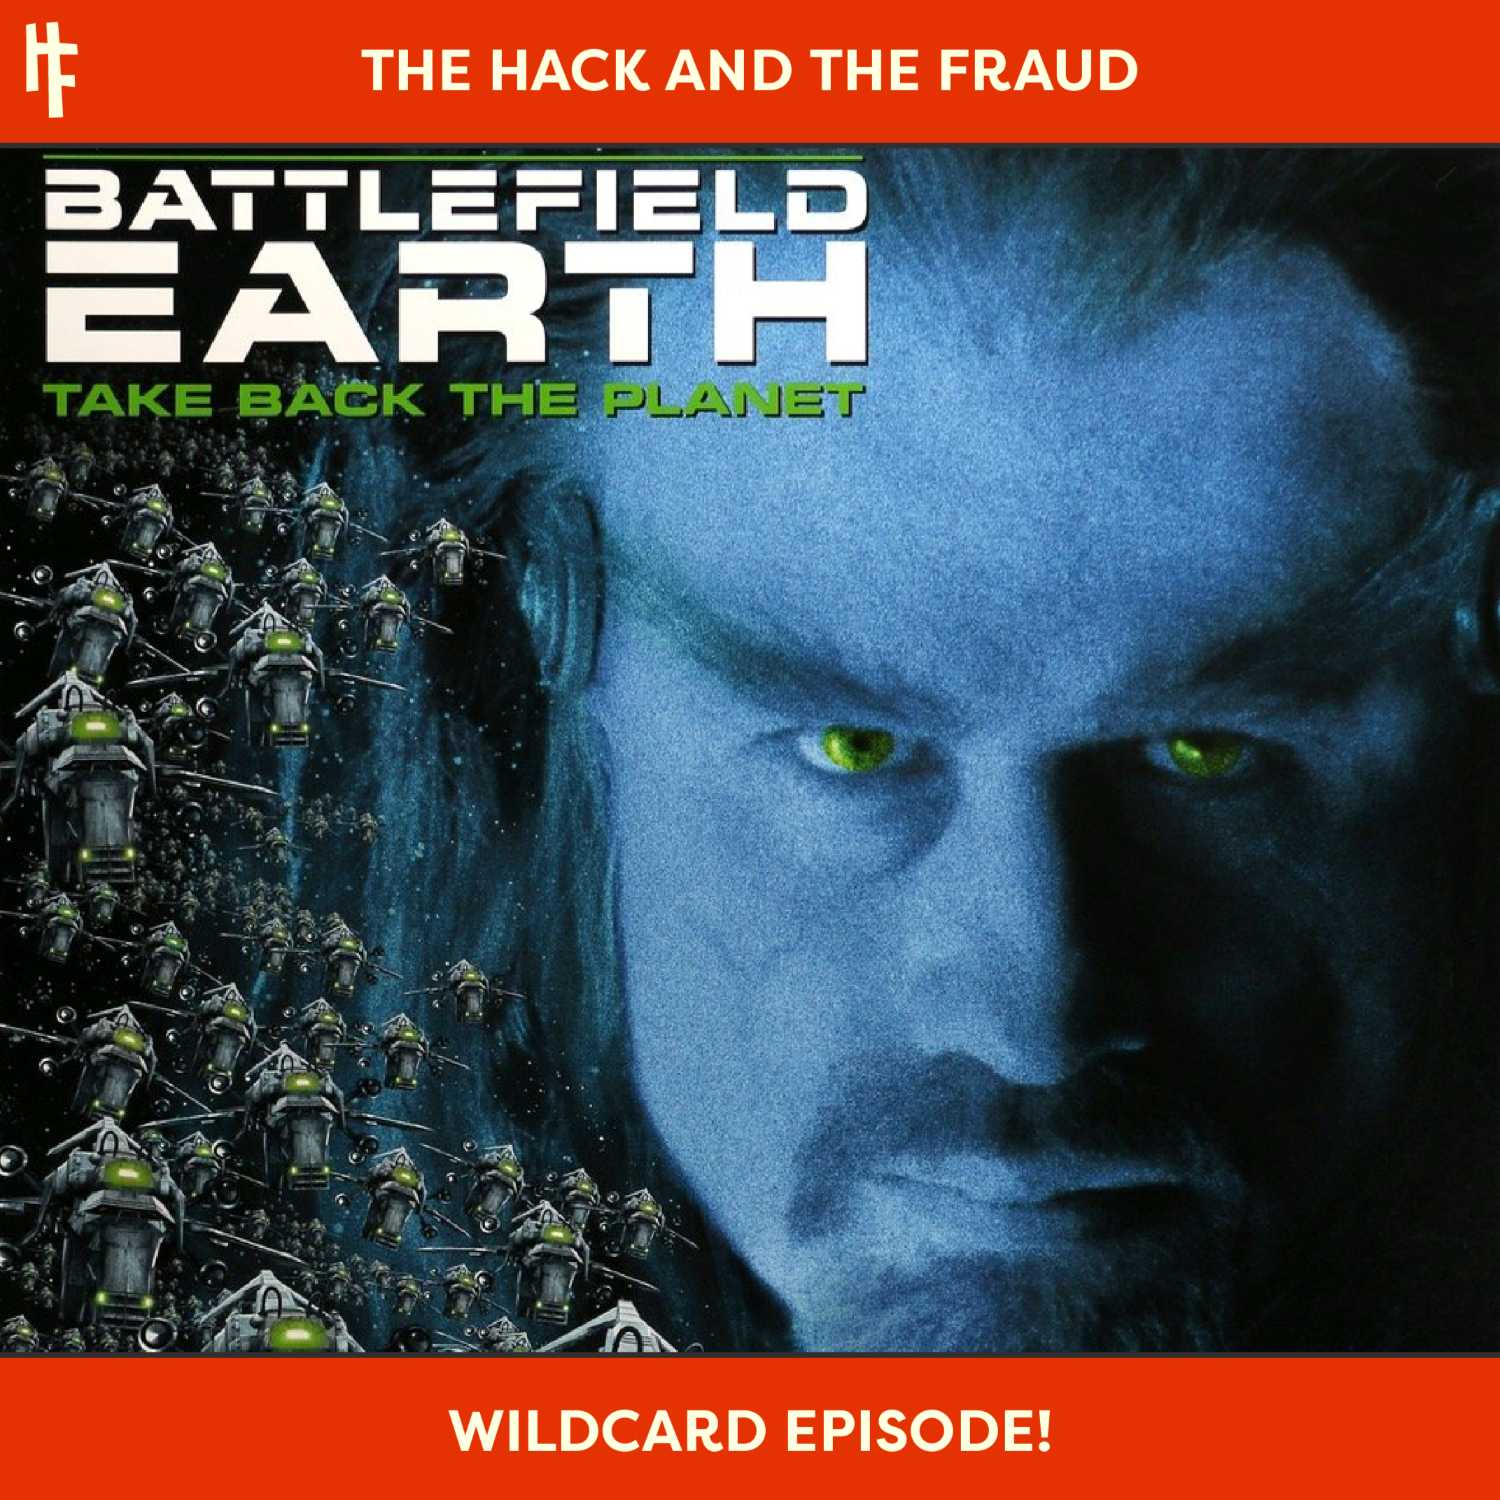 Wildcard Episode - Battlefield Earth